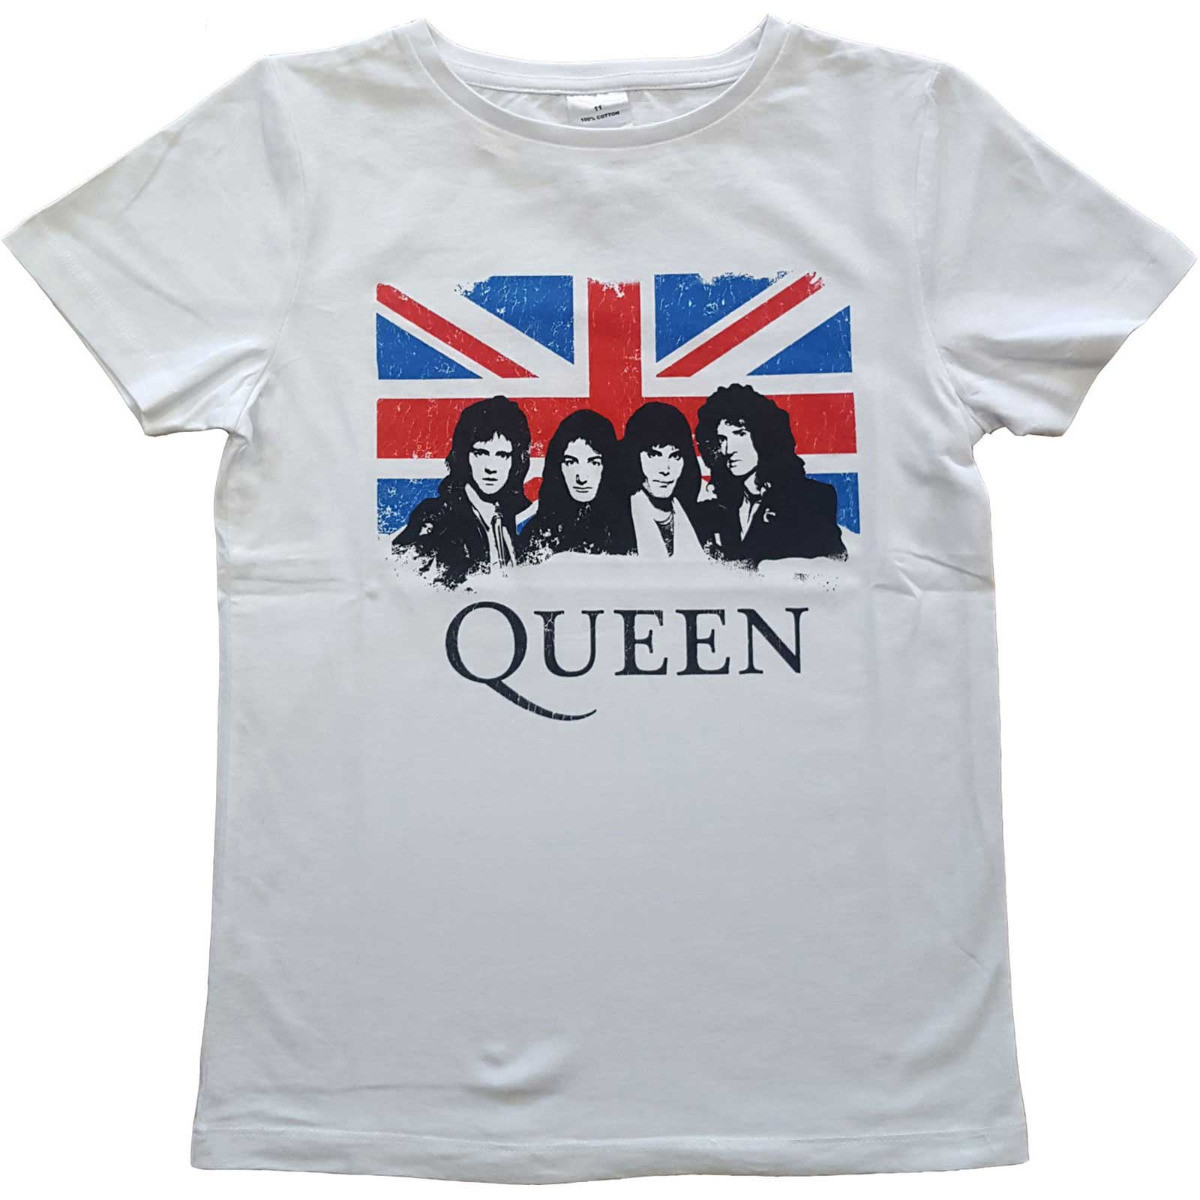 Queen Kinder T-shirt - (England Flag) White